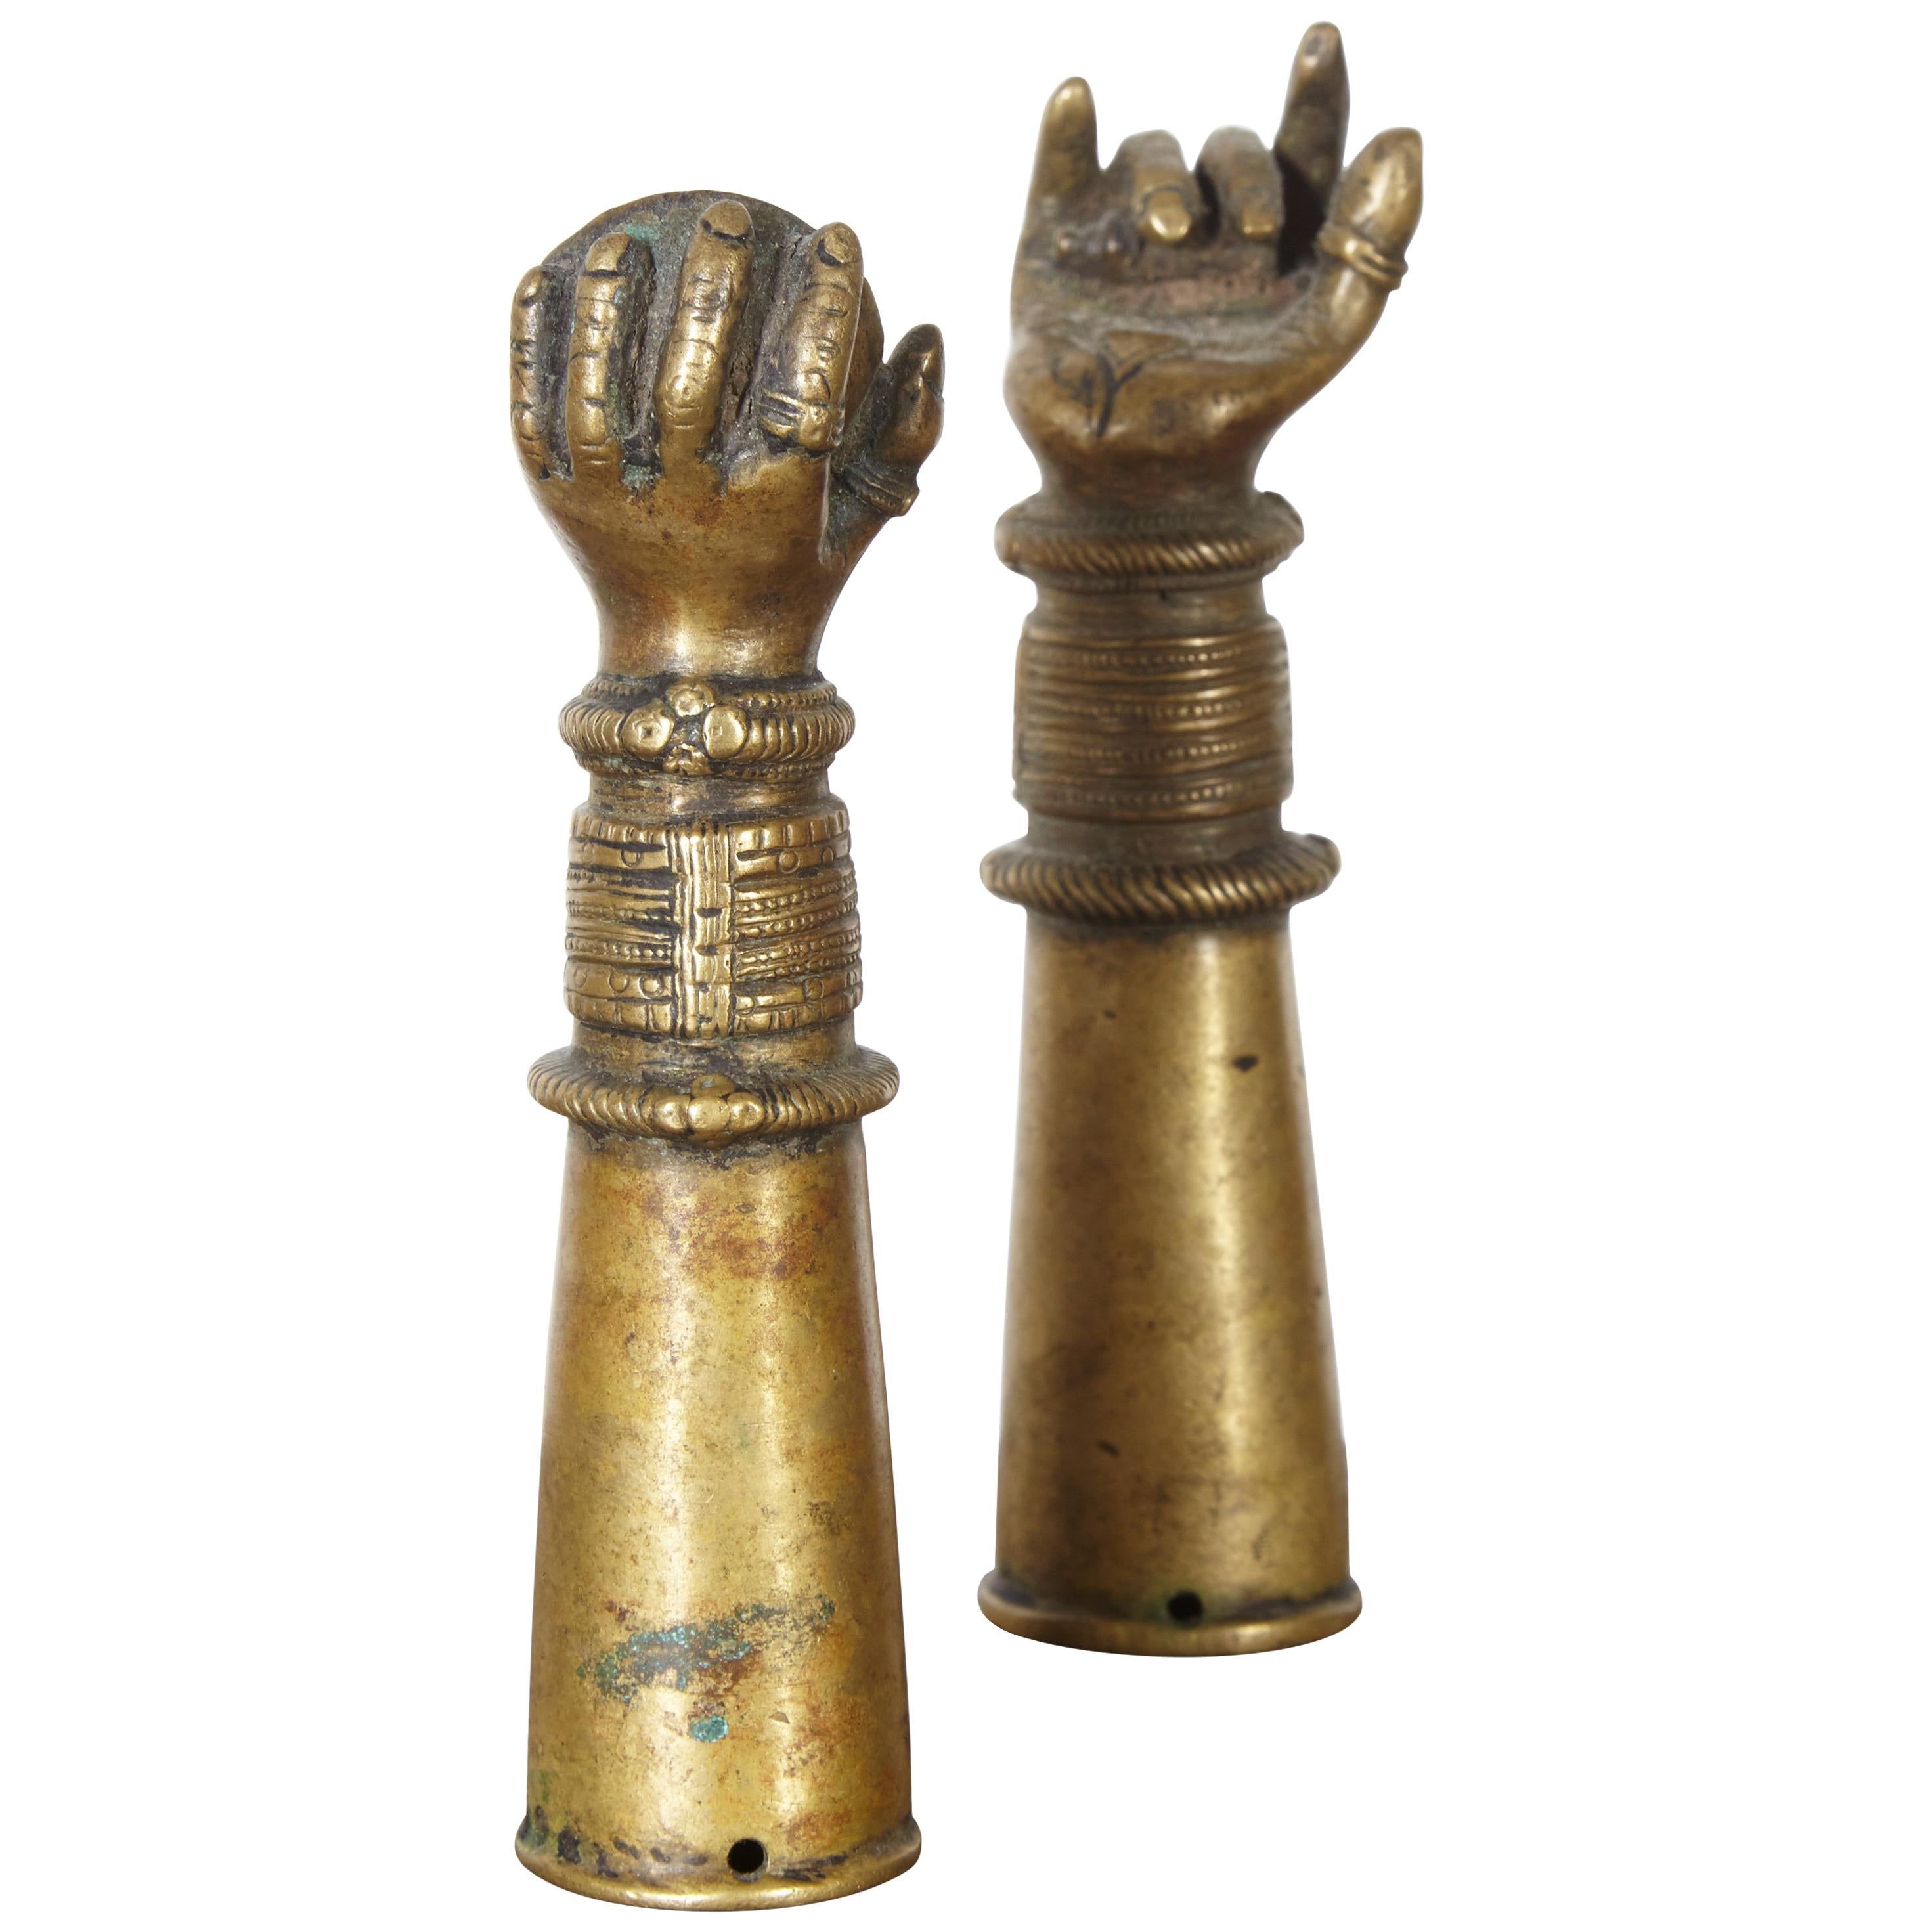 Antique Bronze Votive Hands from India